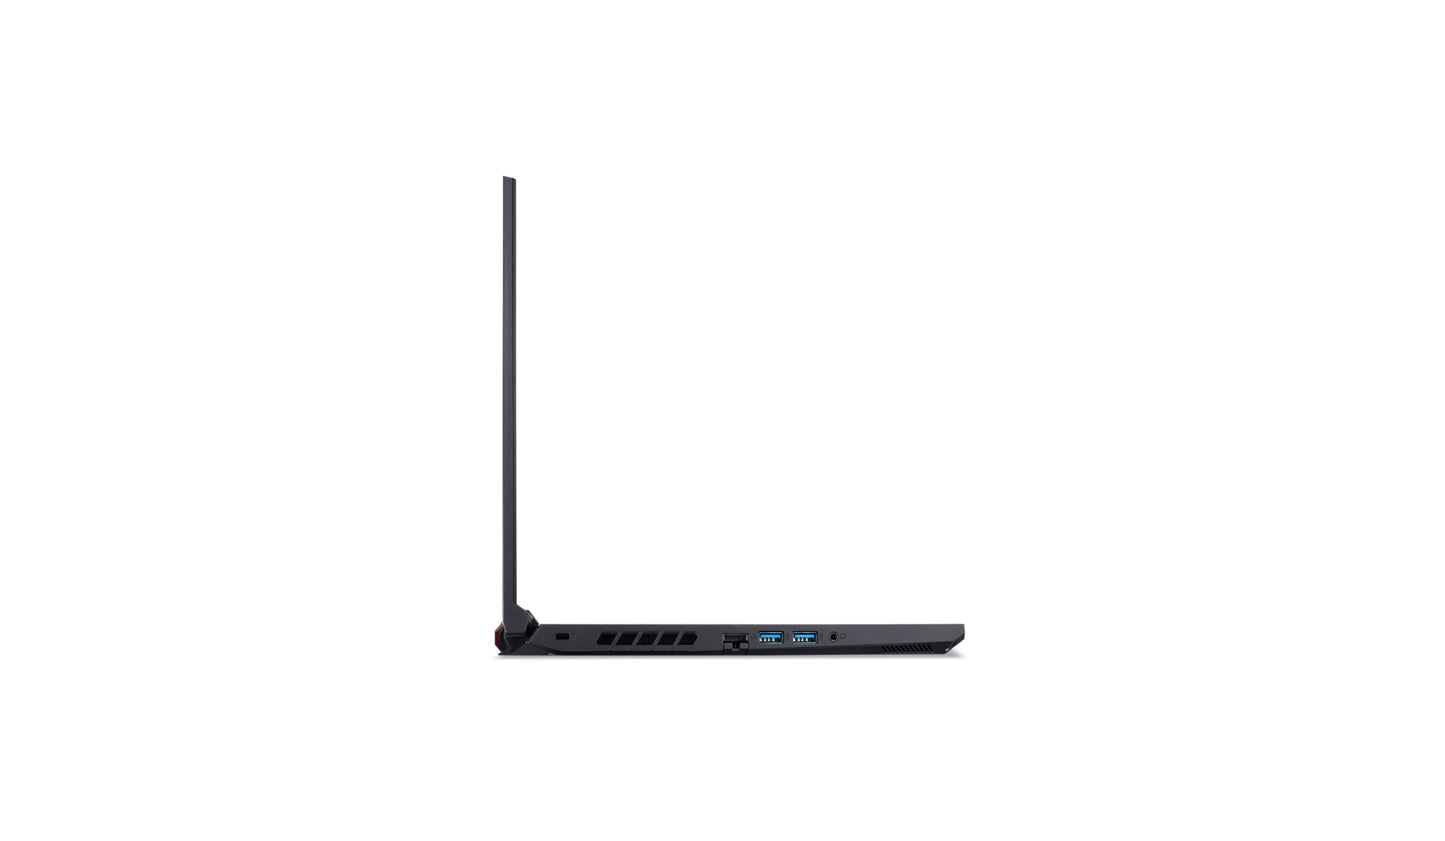 Nitro 5 Gaming Laptop, 10th Generation, Intel® Core™ i5-10300H, 8 GB RAM, 512 GB SSD.